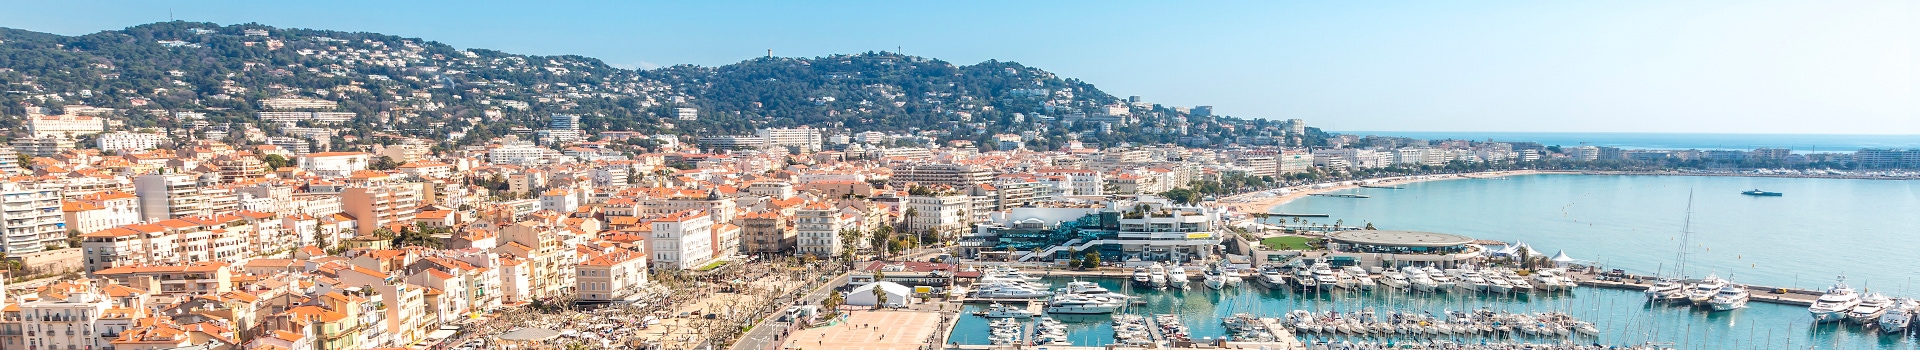 Barcellona - Cannes-Mandelieu